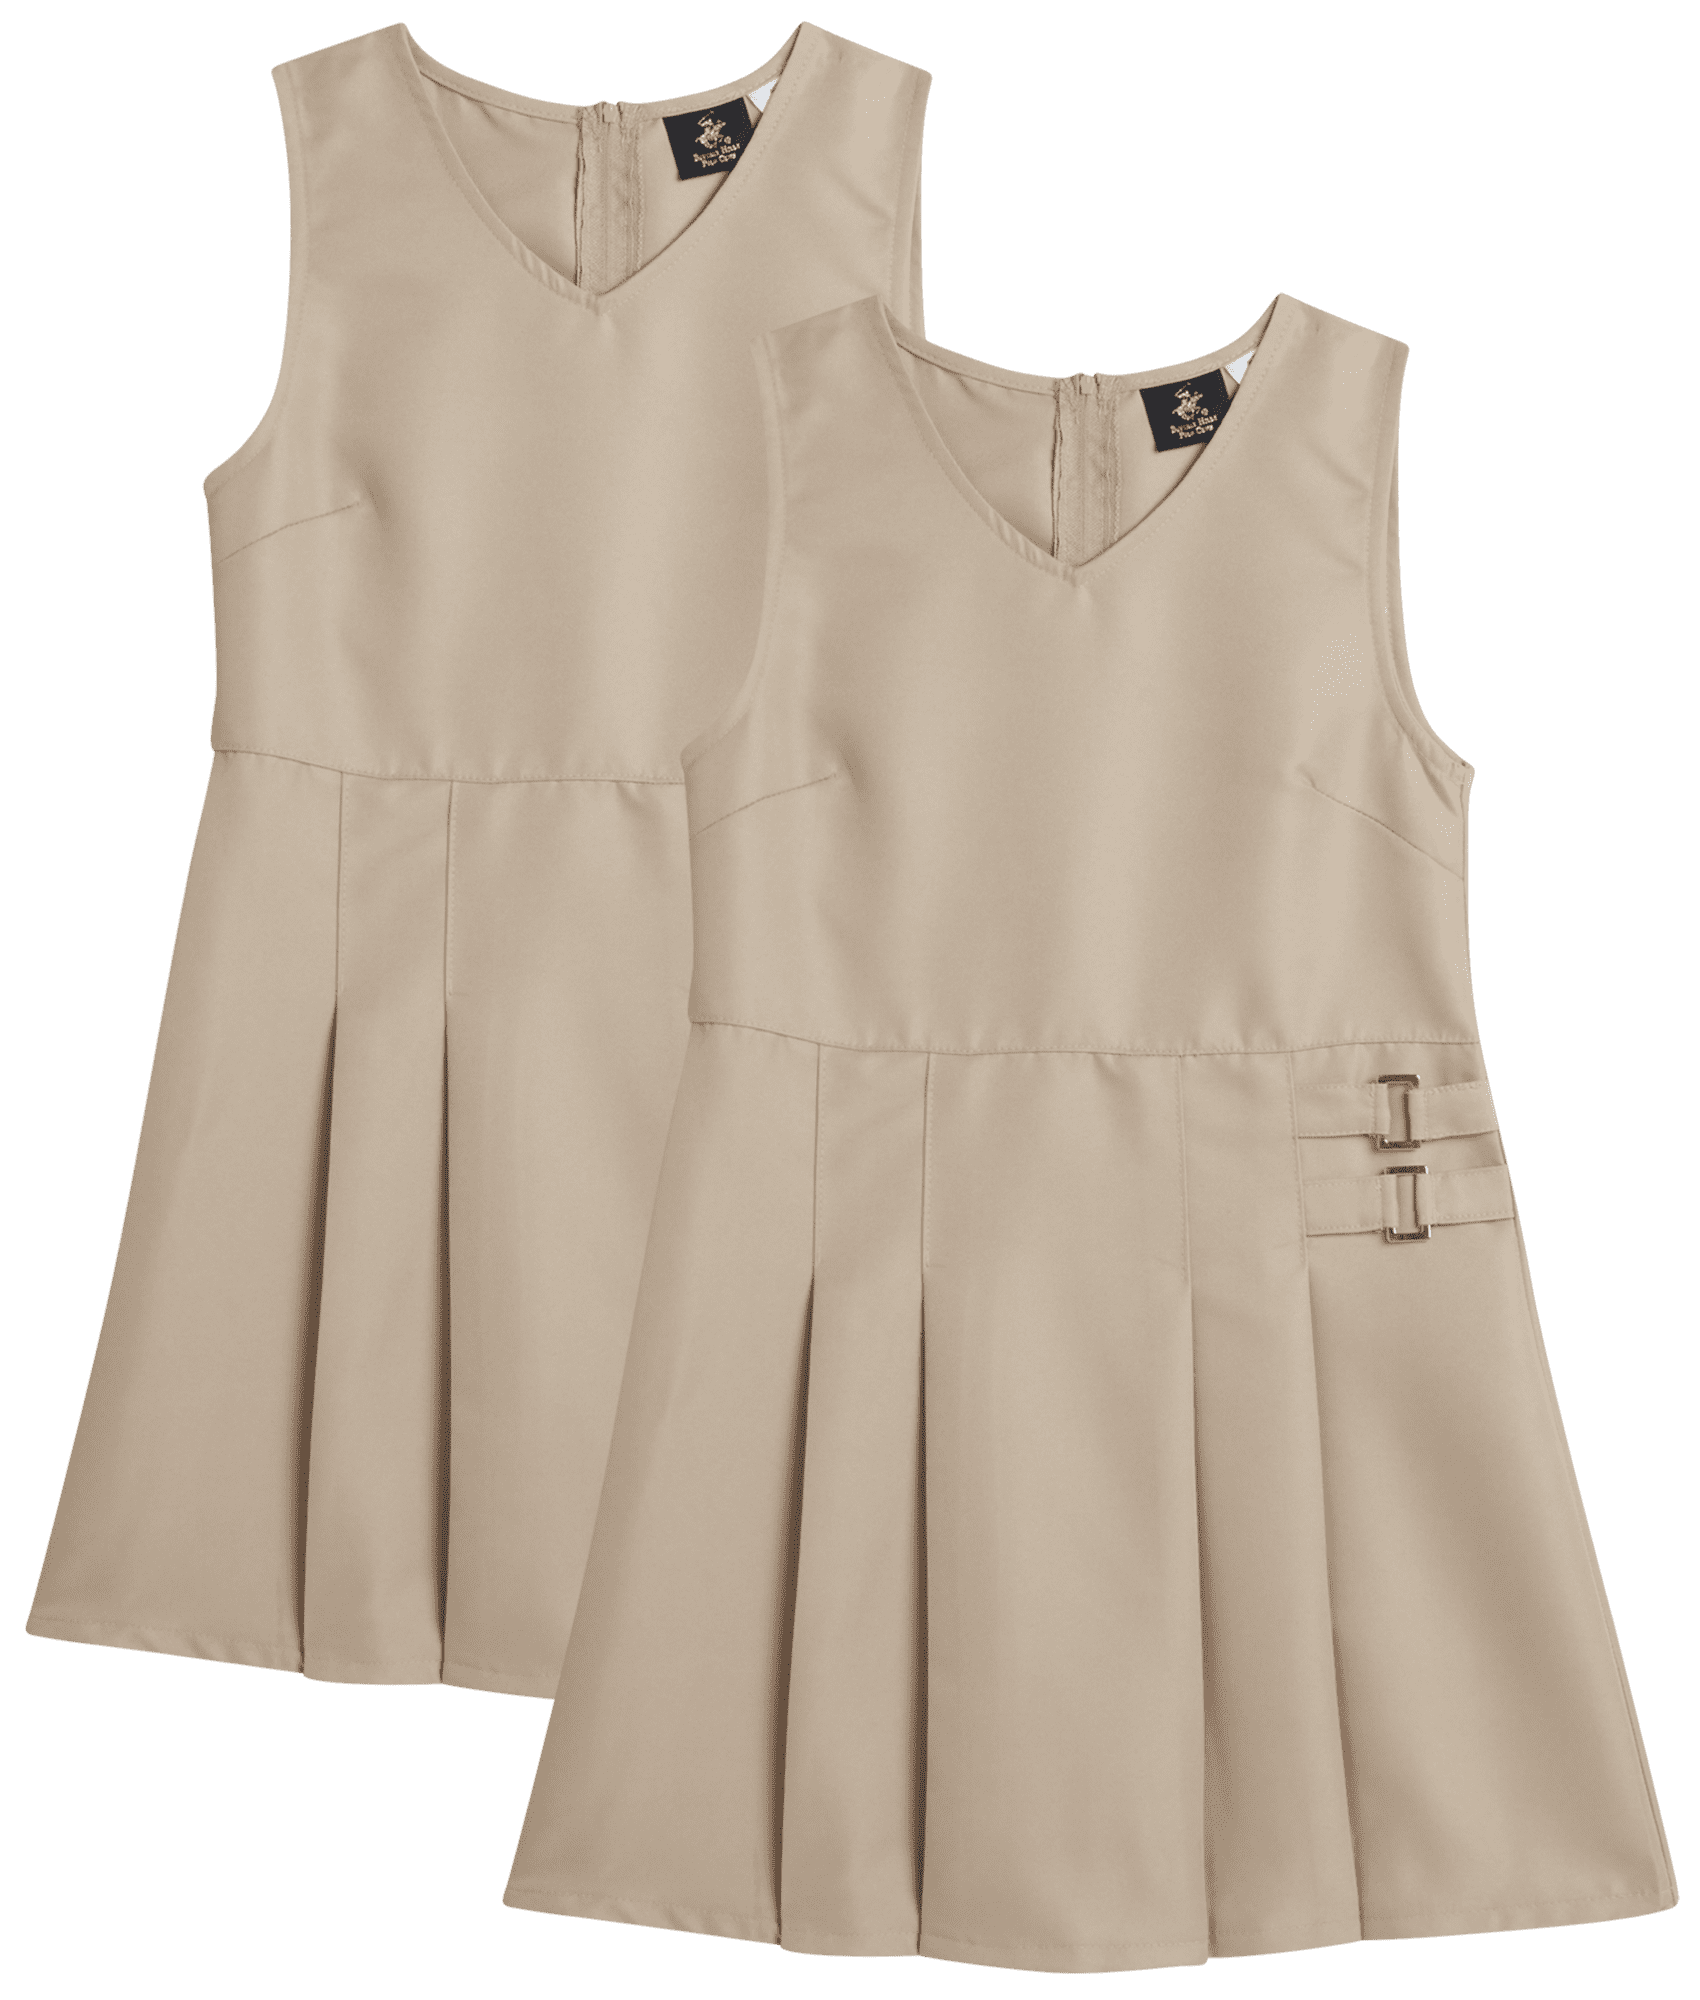 Beverly Hills Polo Club Girls' School Uniform Dress - 2 Pack Sleeveless ...